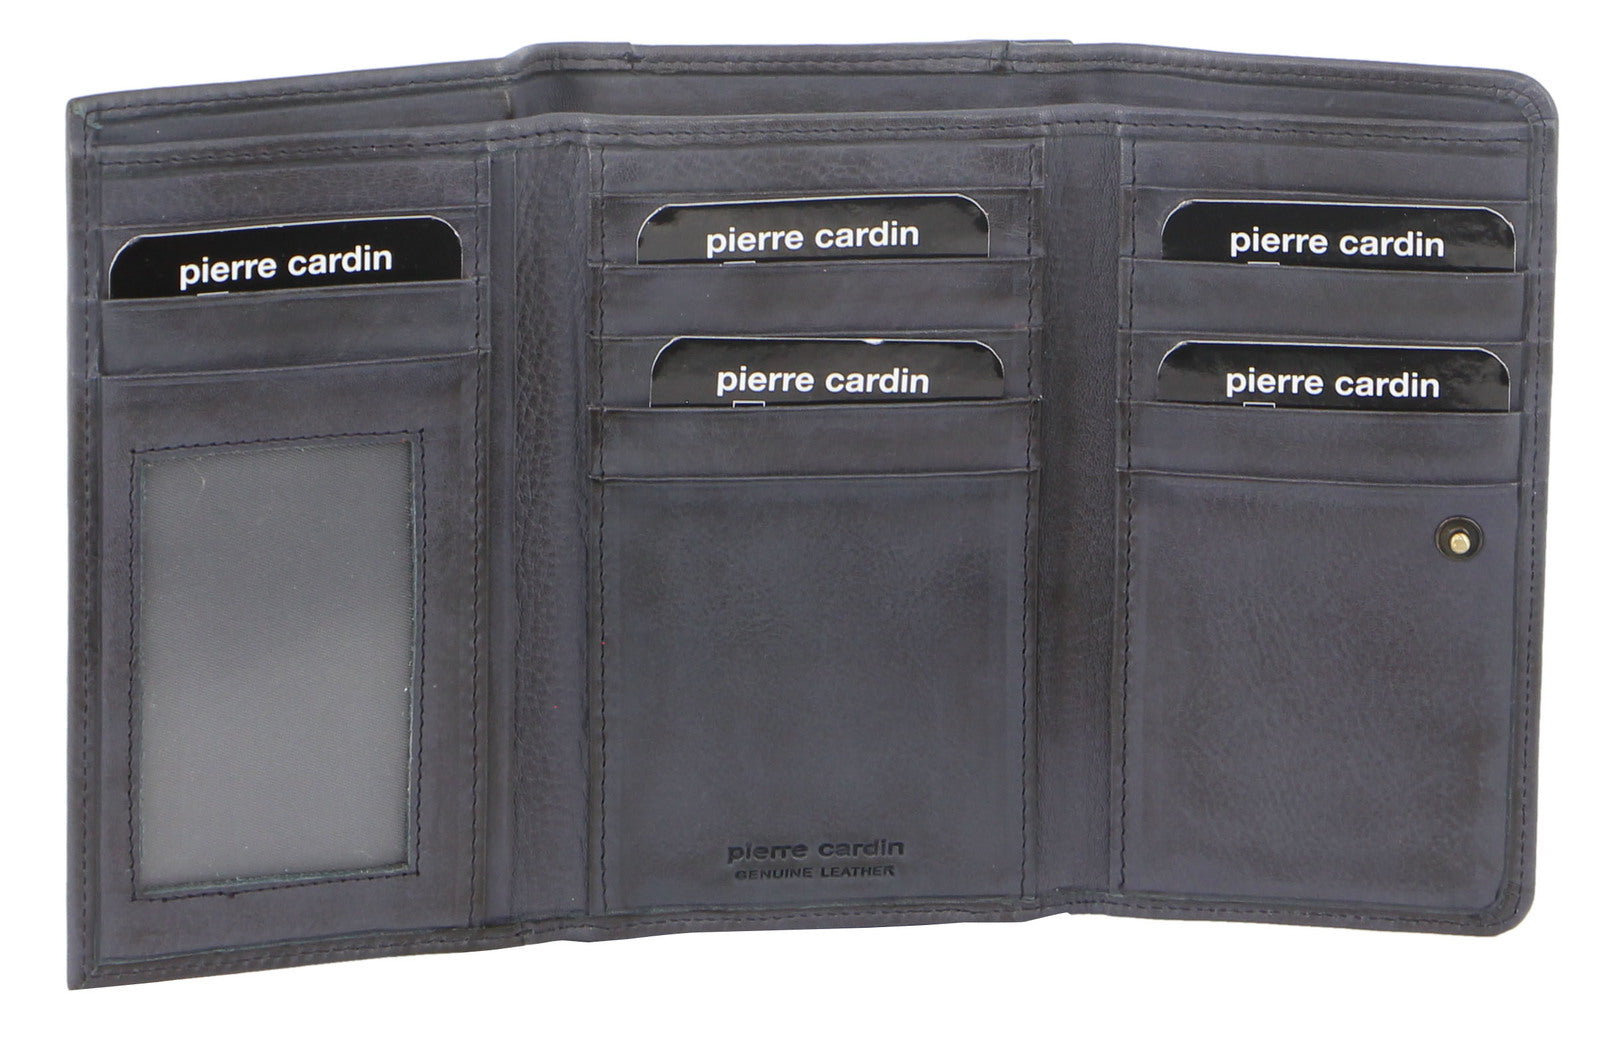 Pierre Cardin Womens Soft Italian Leather RFID Purse Wallet Rustic - Teal - SILBERSHELL